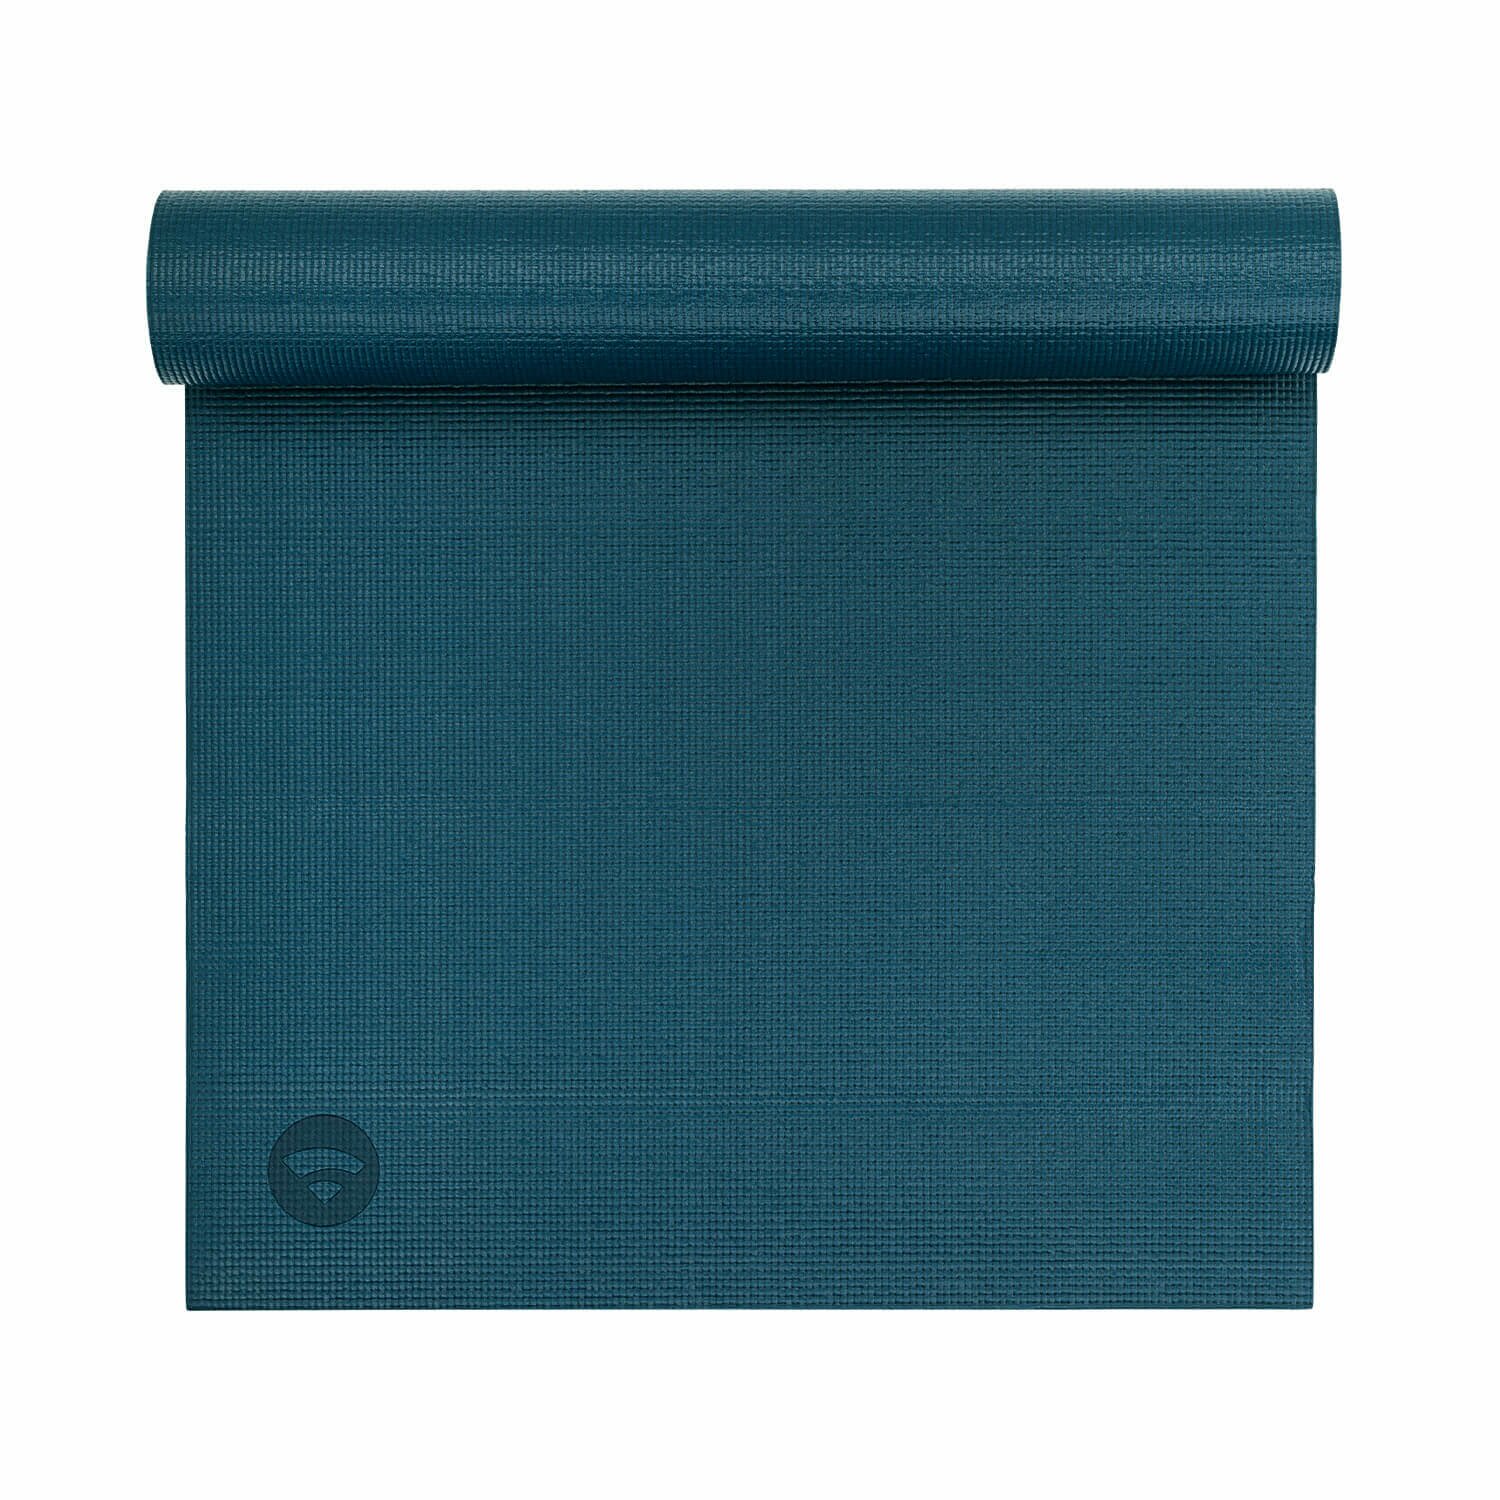 Tapete de yoga Asana - 4.5mm PVC ecológico 4